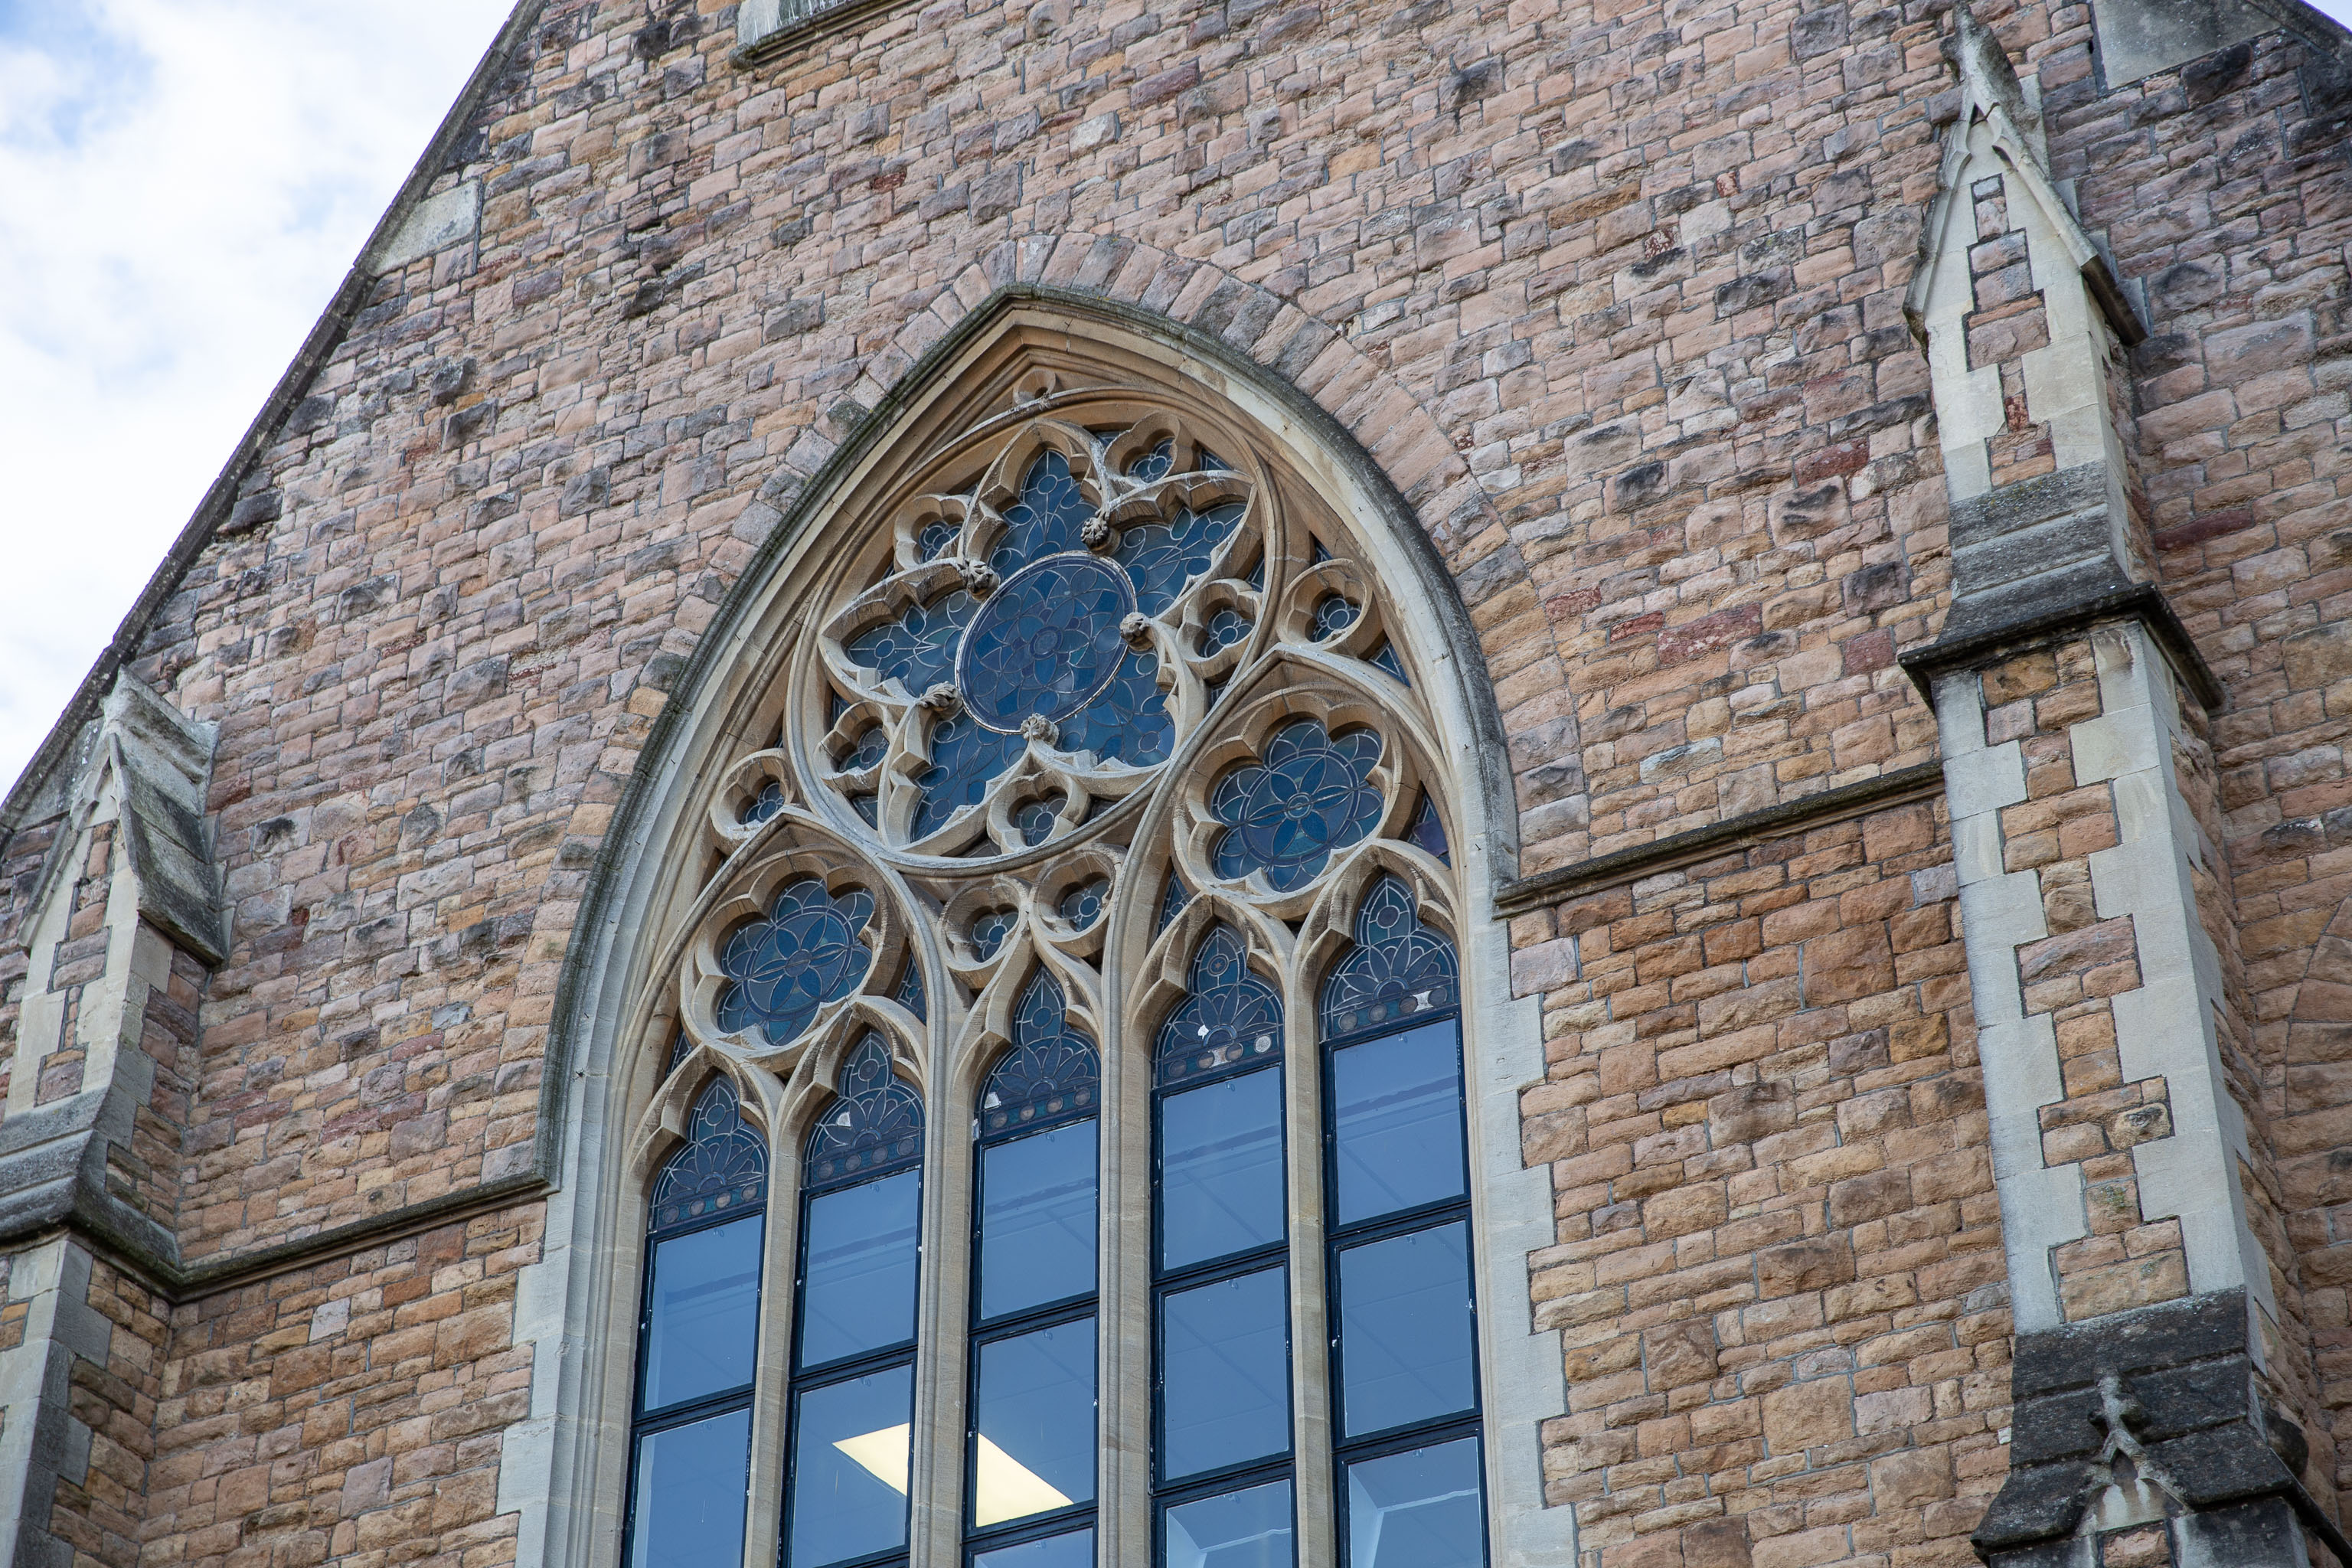 The Old Chapel Window
